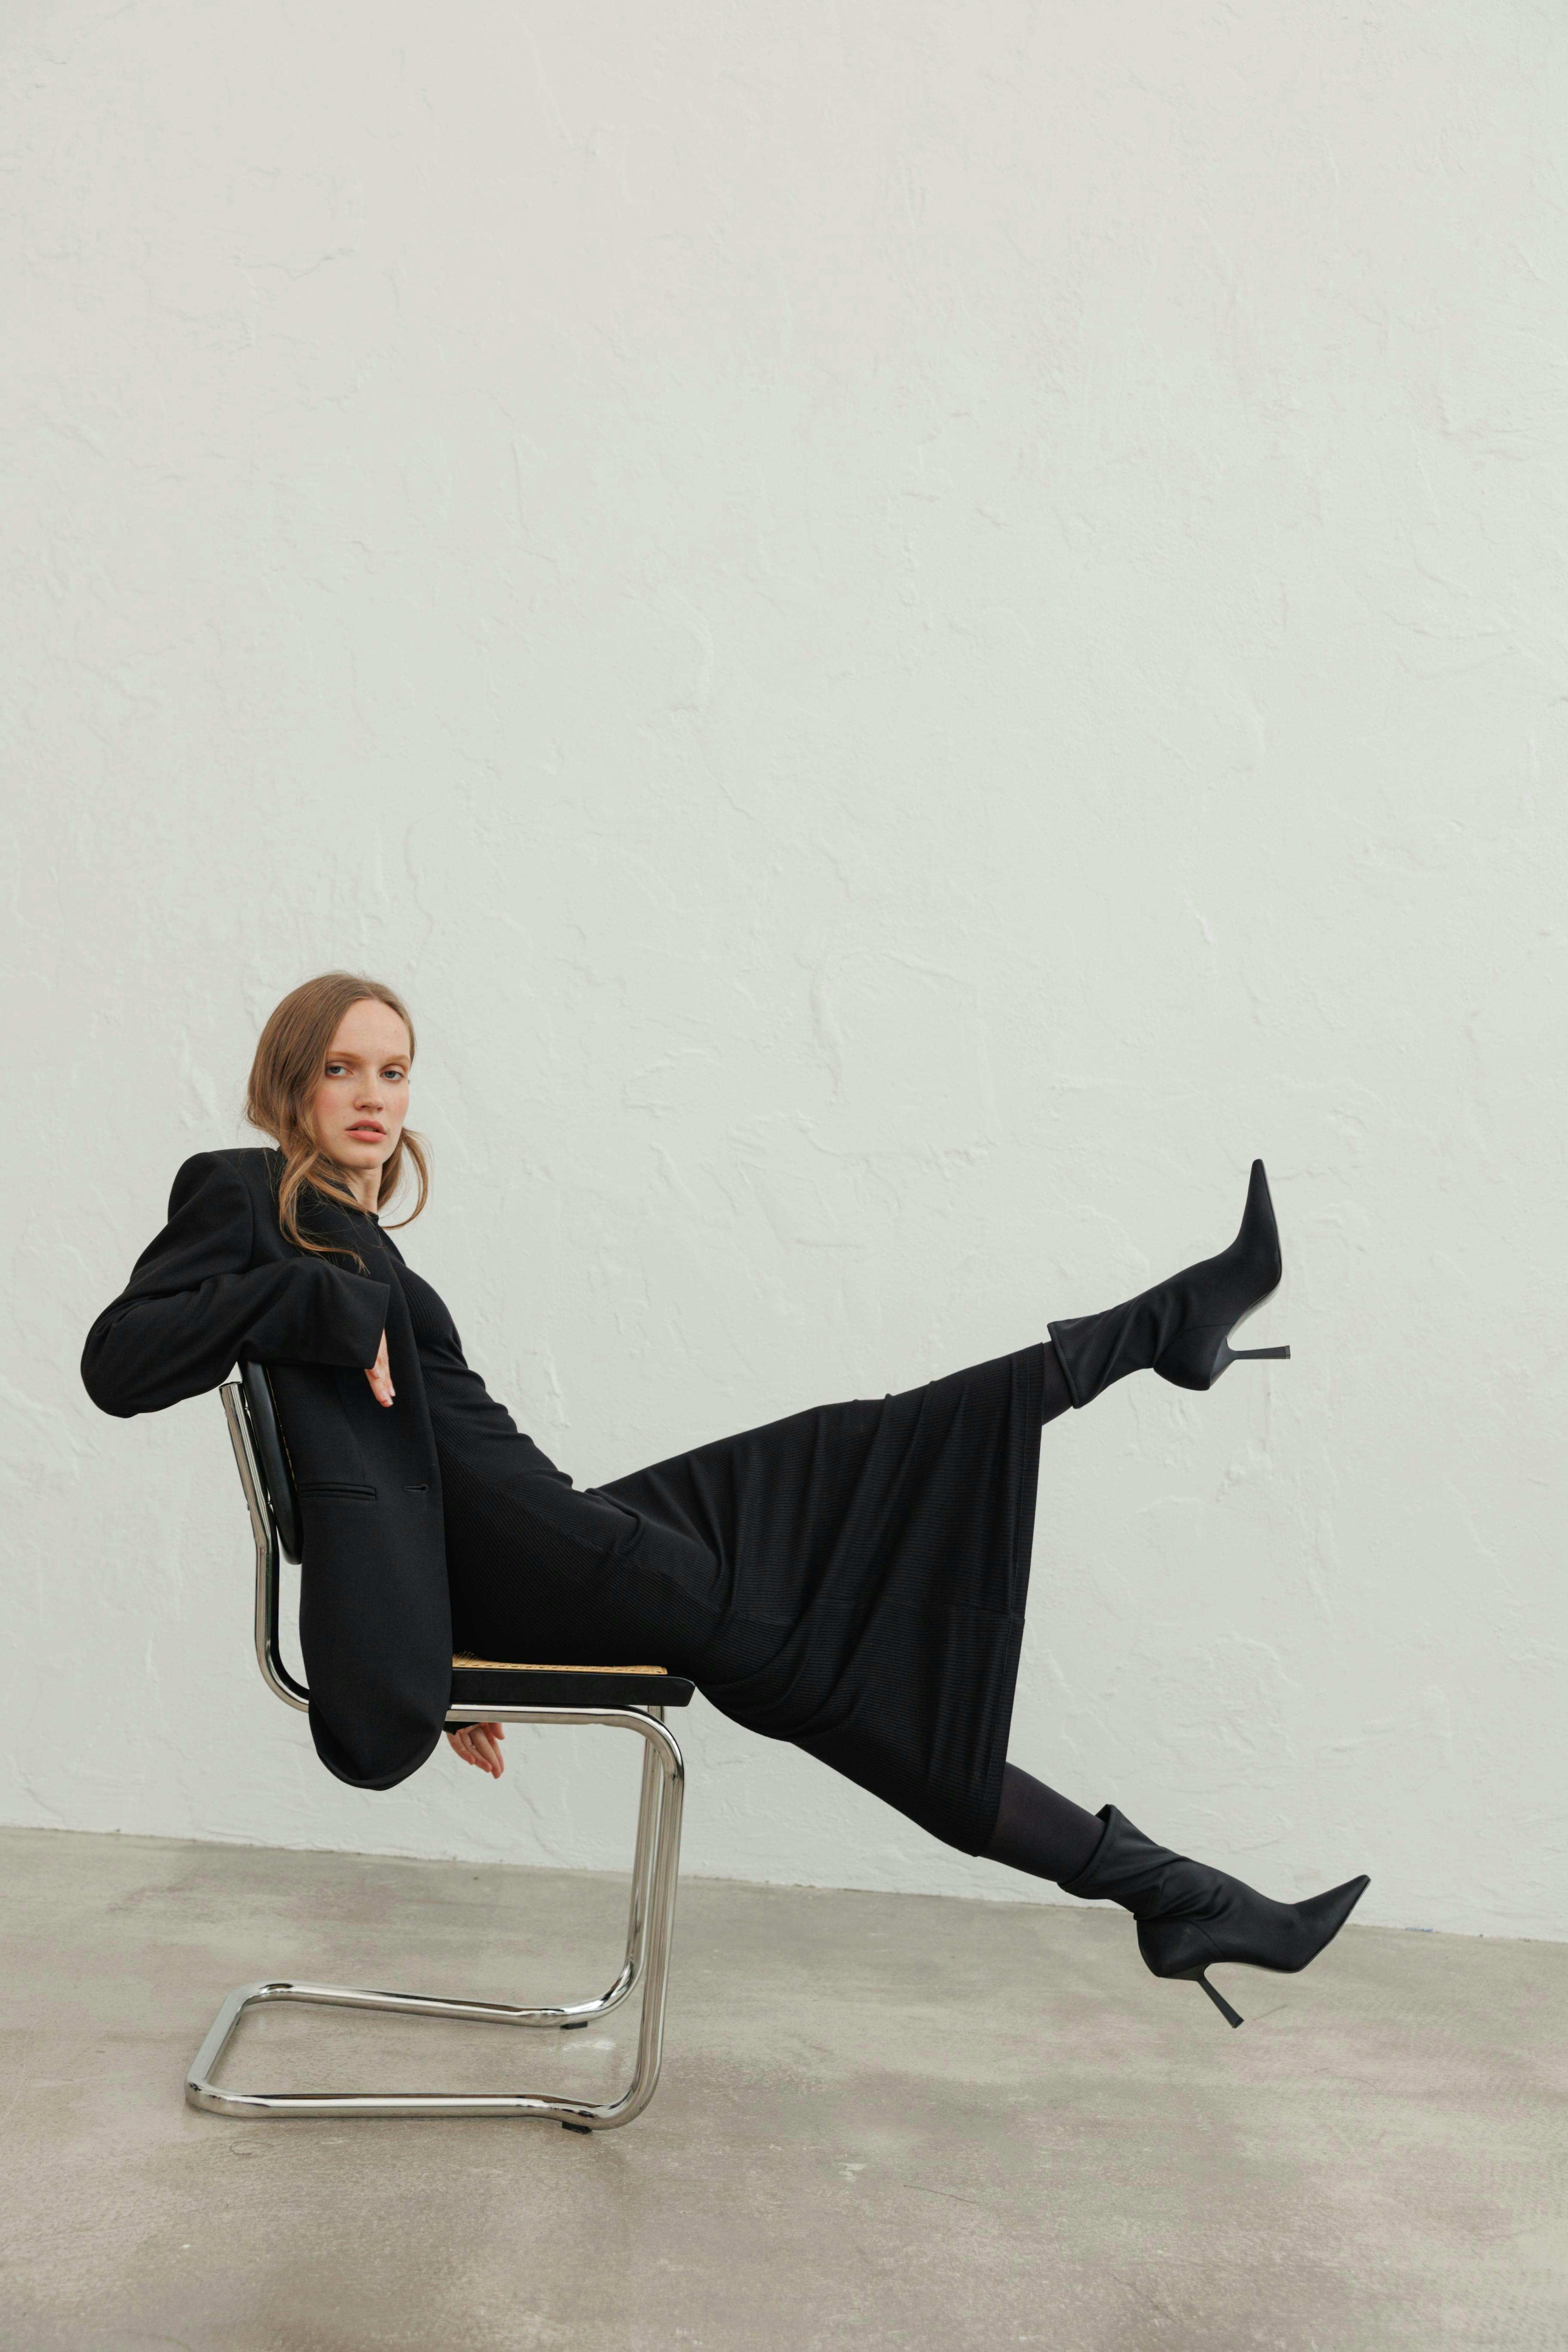 shoe high heel formal wear woman adult female person sitting coat furniture